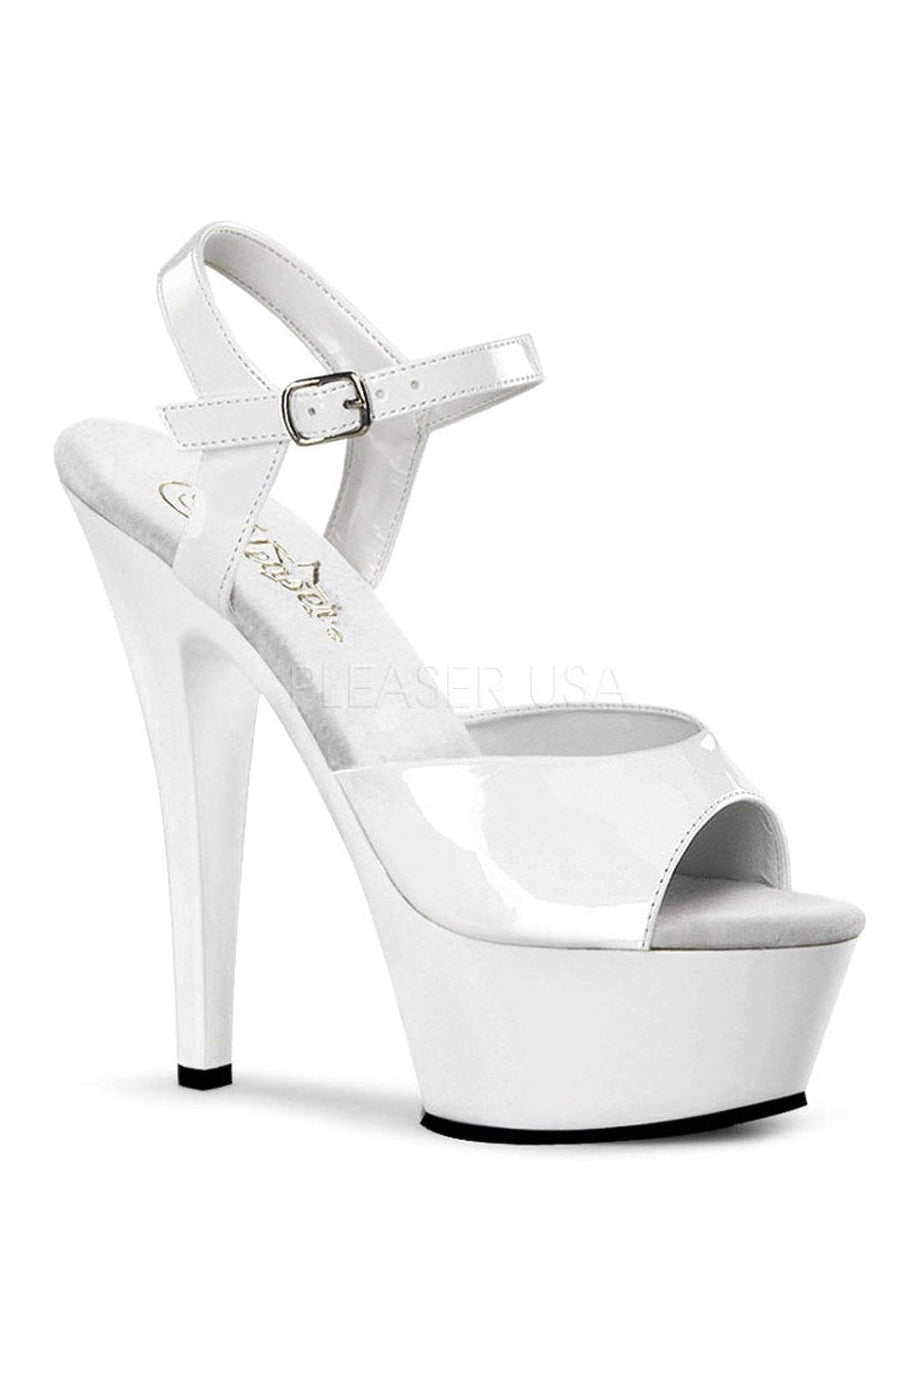 KISS-209 Platform Sandal | White Patent-Pleaser-White-Sandals-SEXYSHOES.COM